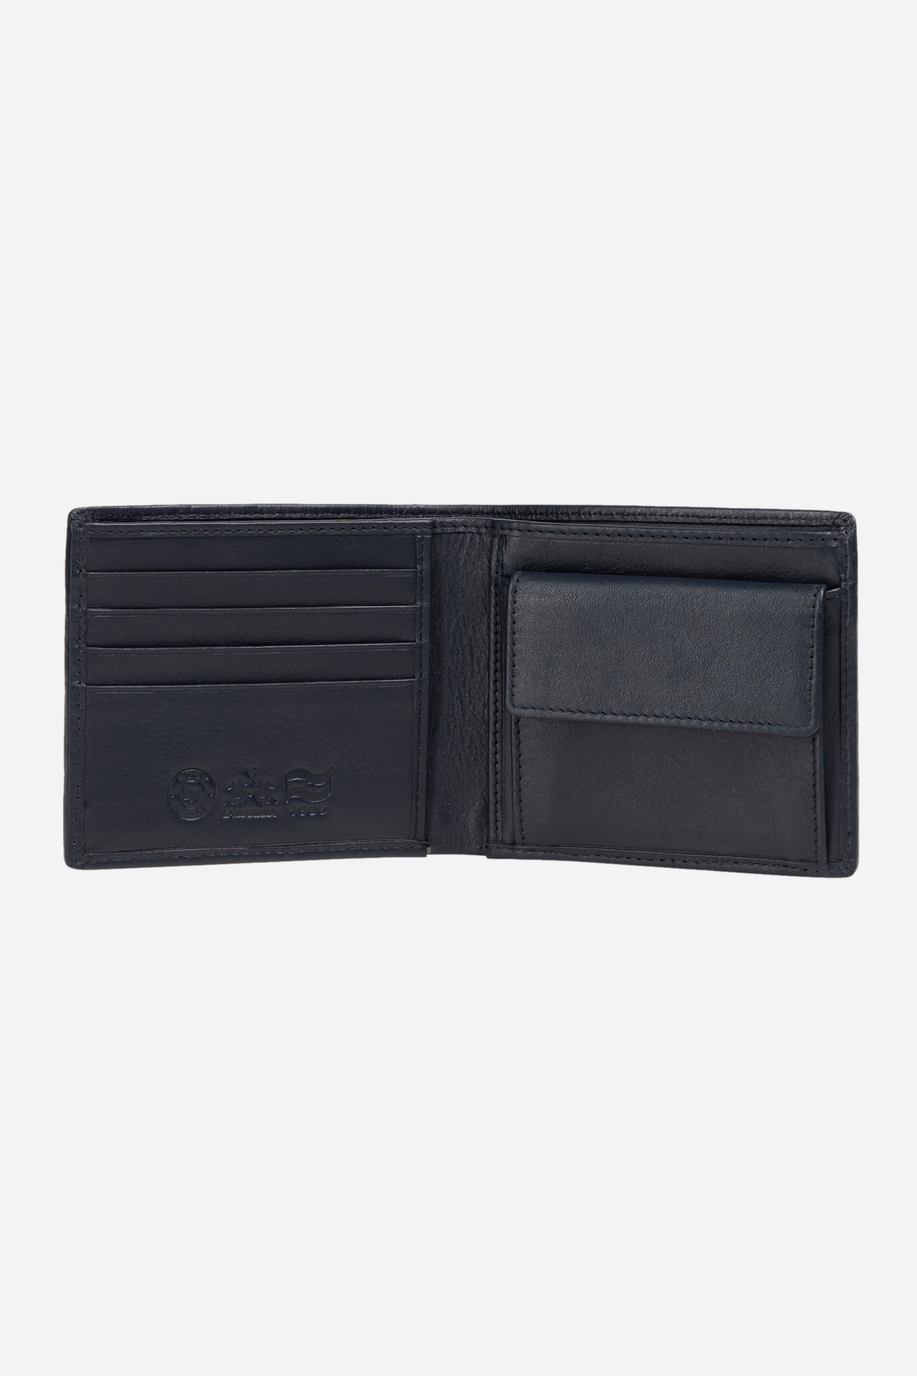 Leather wallet - Lopez - -30% | step 1 | US | La Martina - Official Online Shop